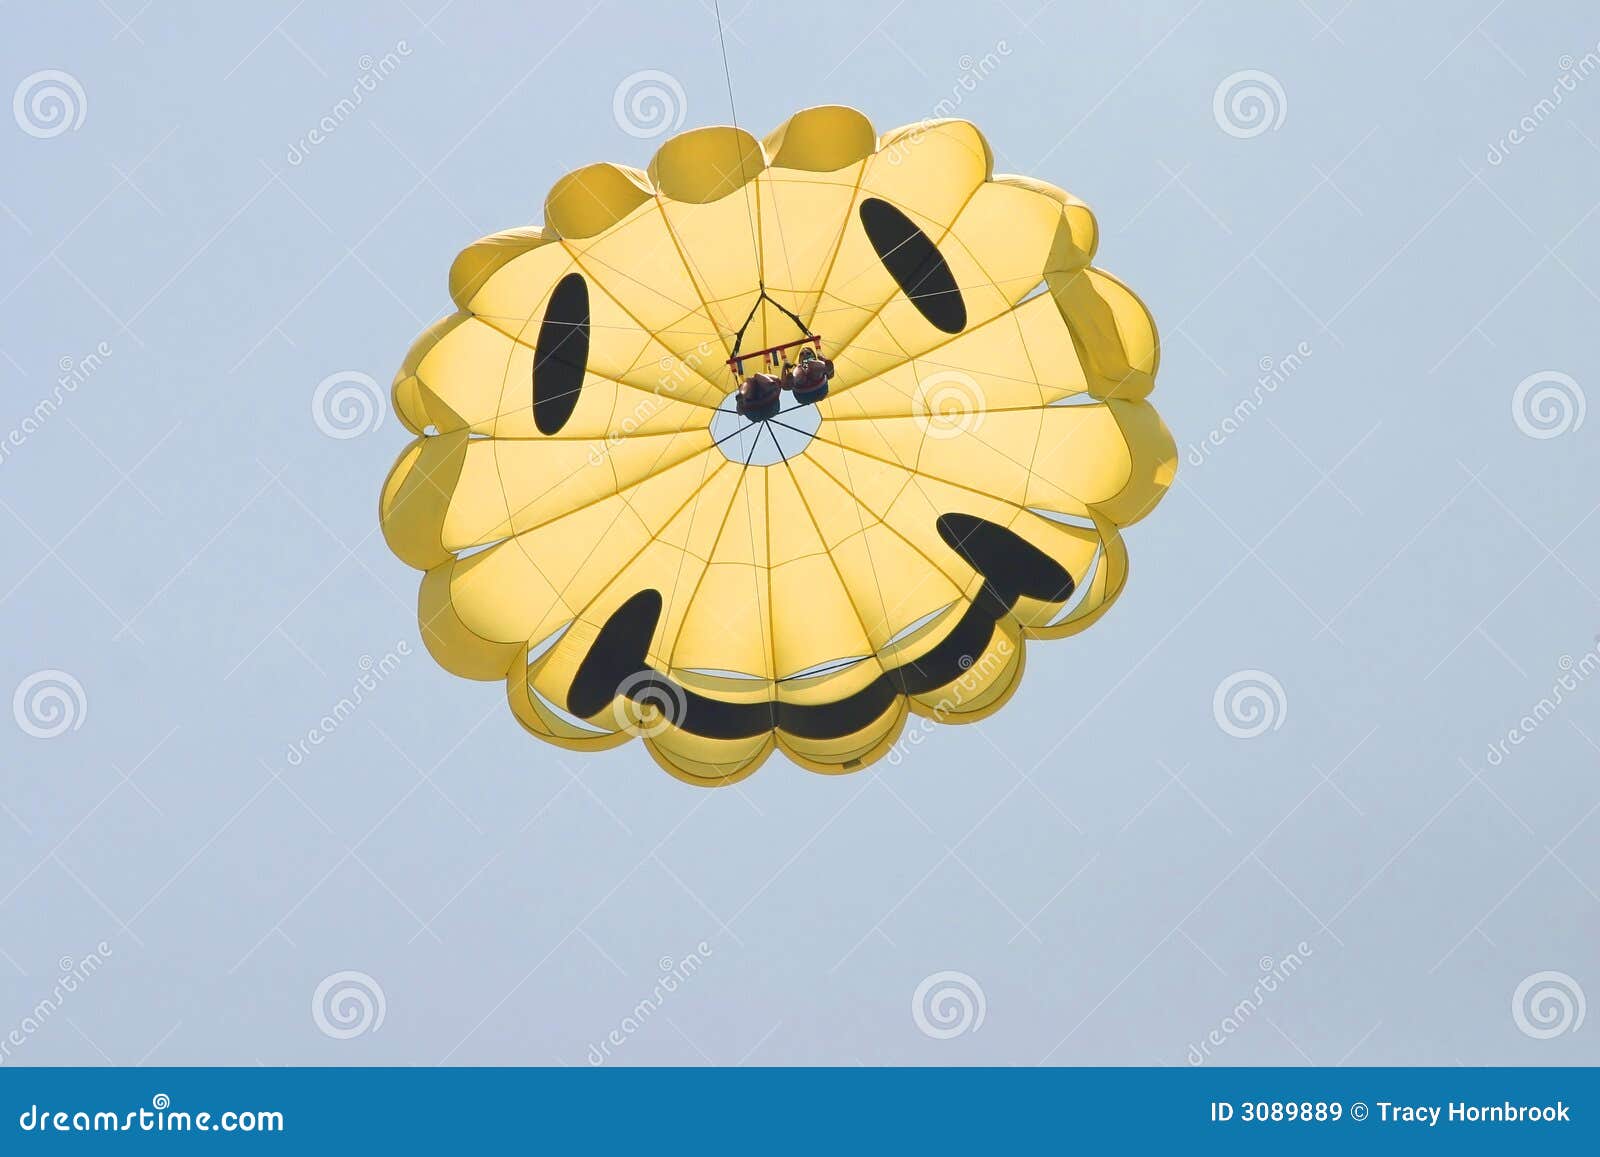 smiling parasail